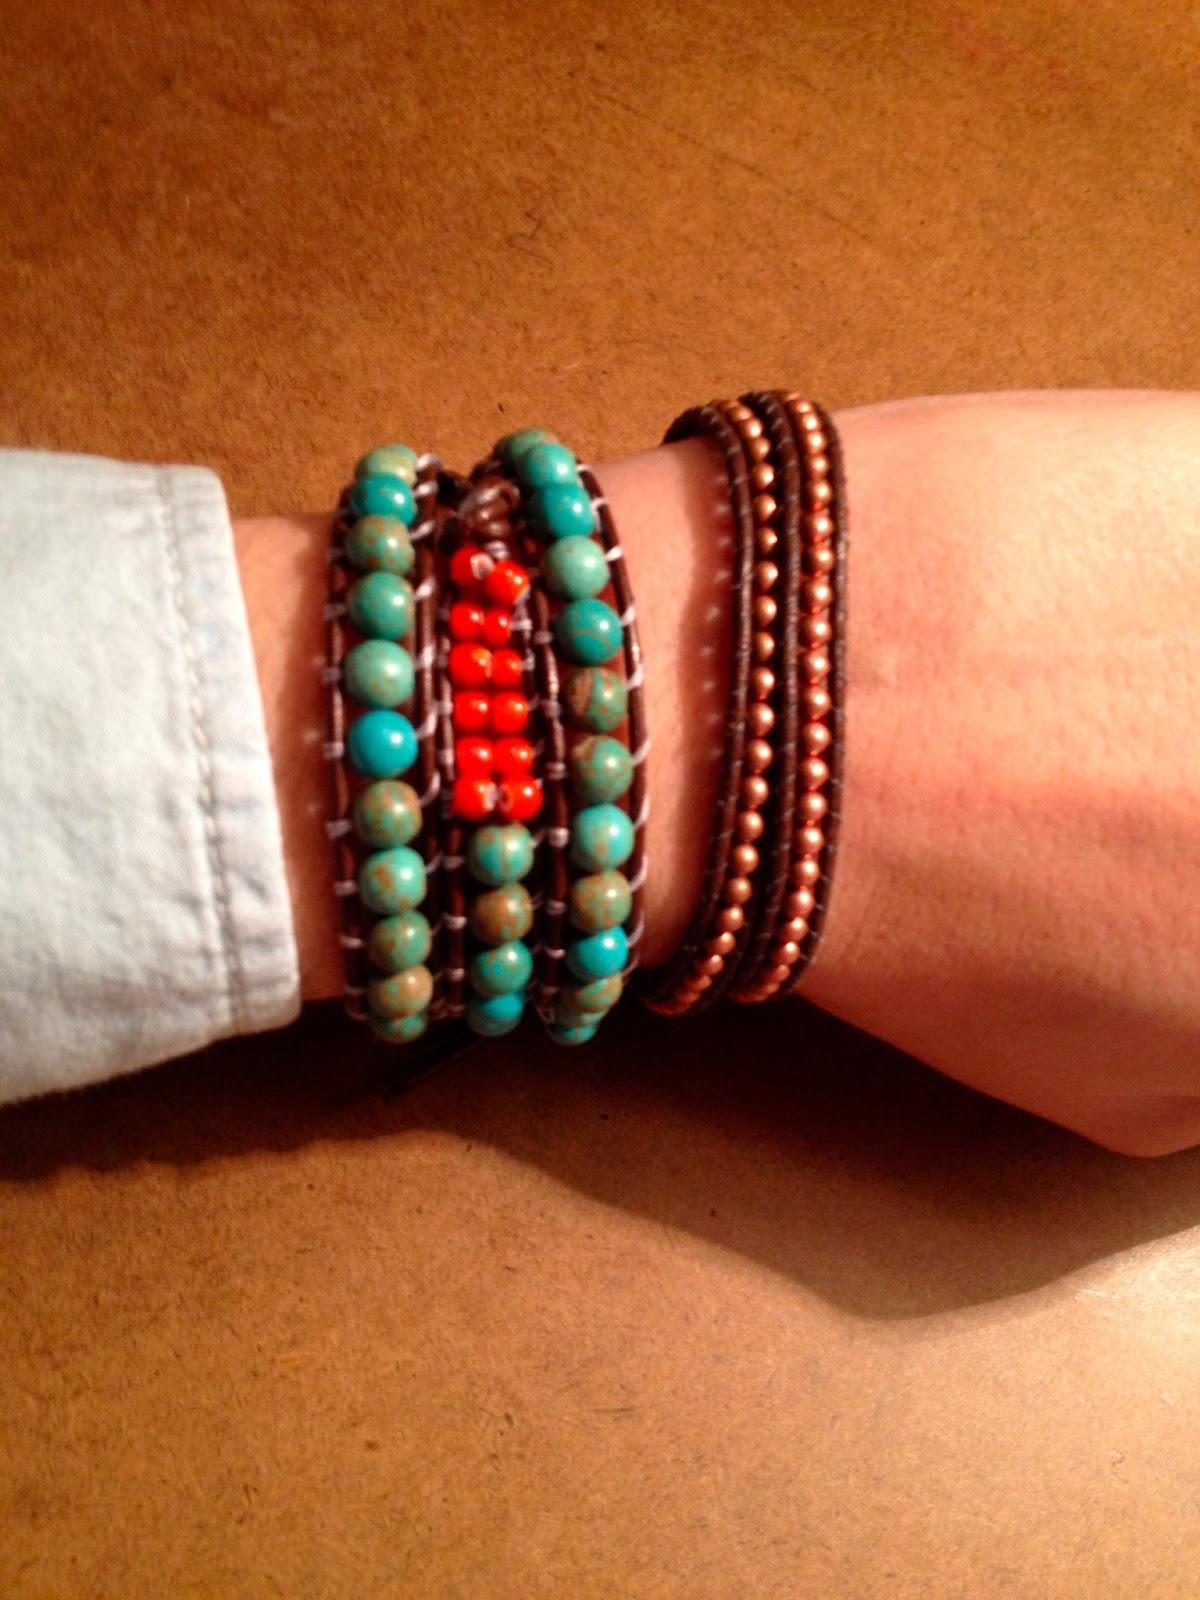 Best ideas about DIY Wrapped Bracelets
. Save or Pin Beaded Wrap Bracelet DIY Now.